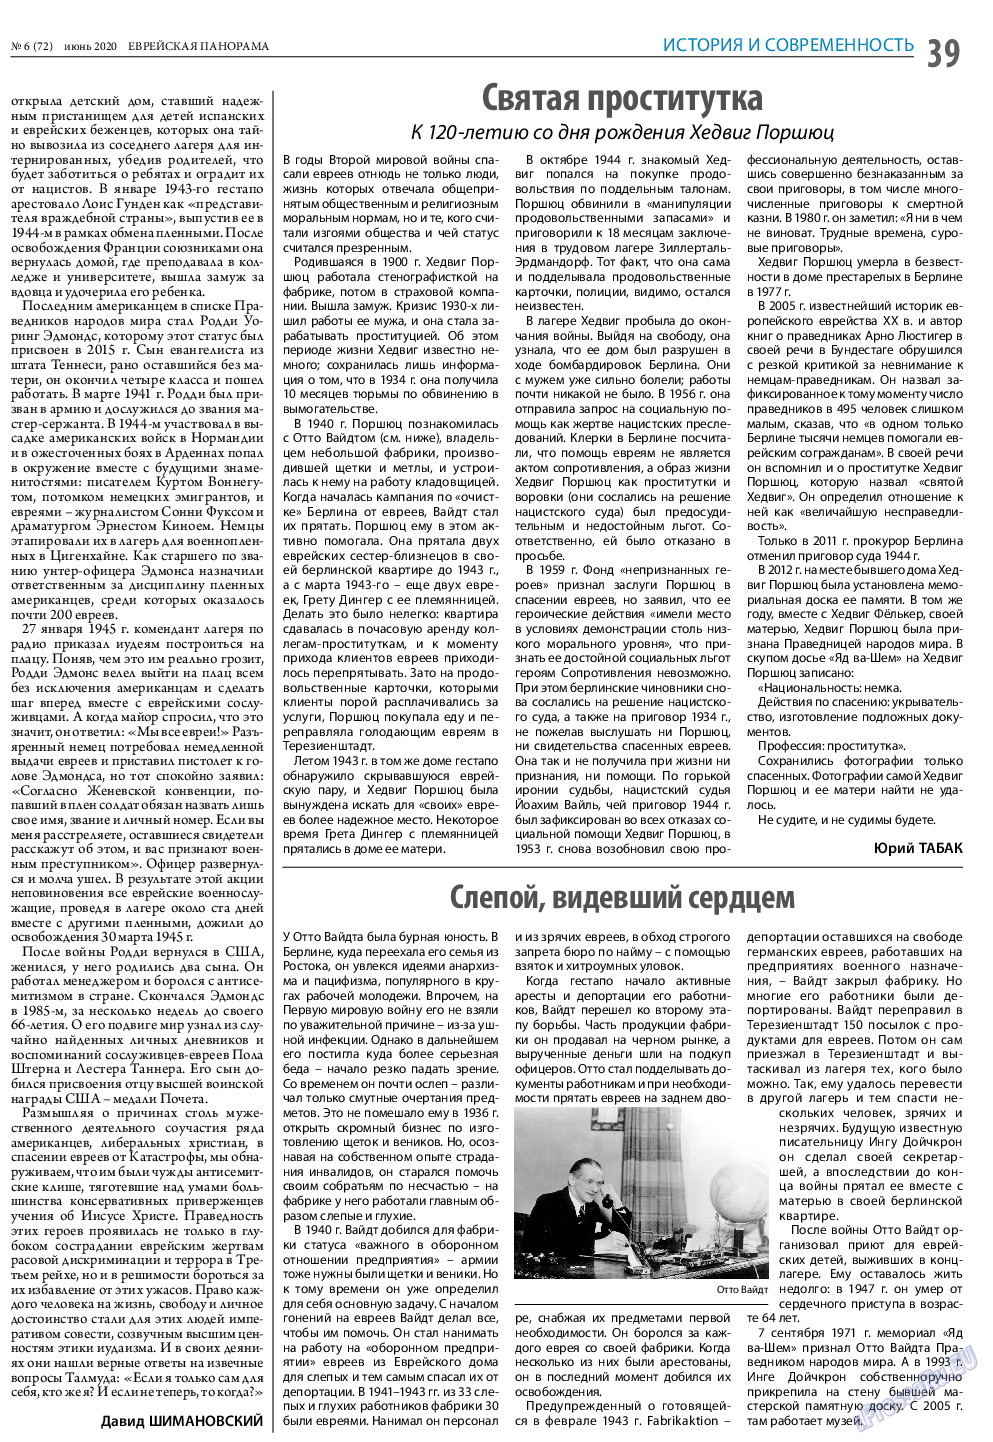 Еврейская панорама, газета. 2020 №6 стр.39